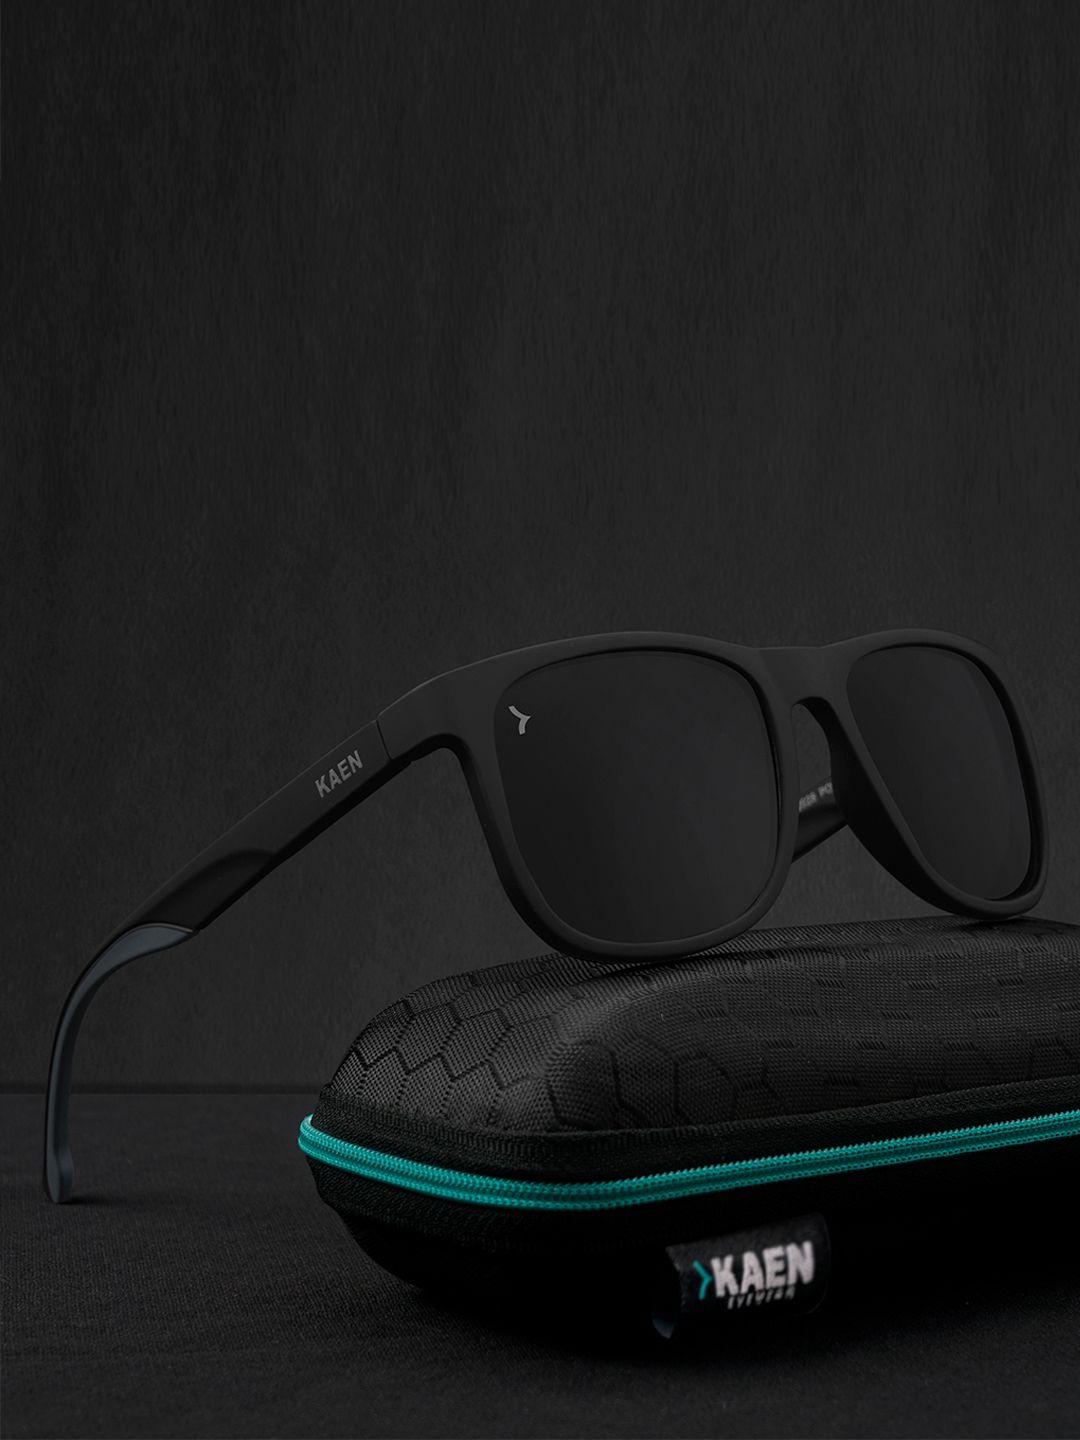 eyewearlabs-unisex-rectangle-sunglasses-with-polarised-lens-elkaskoryc1